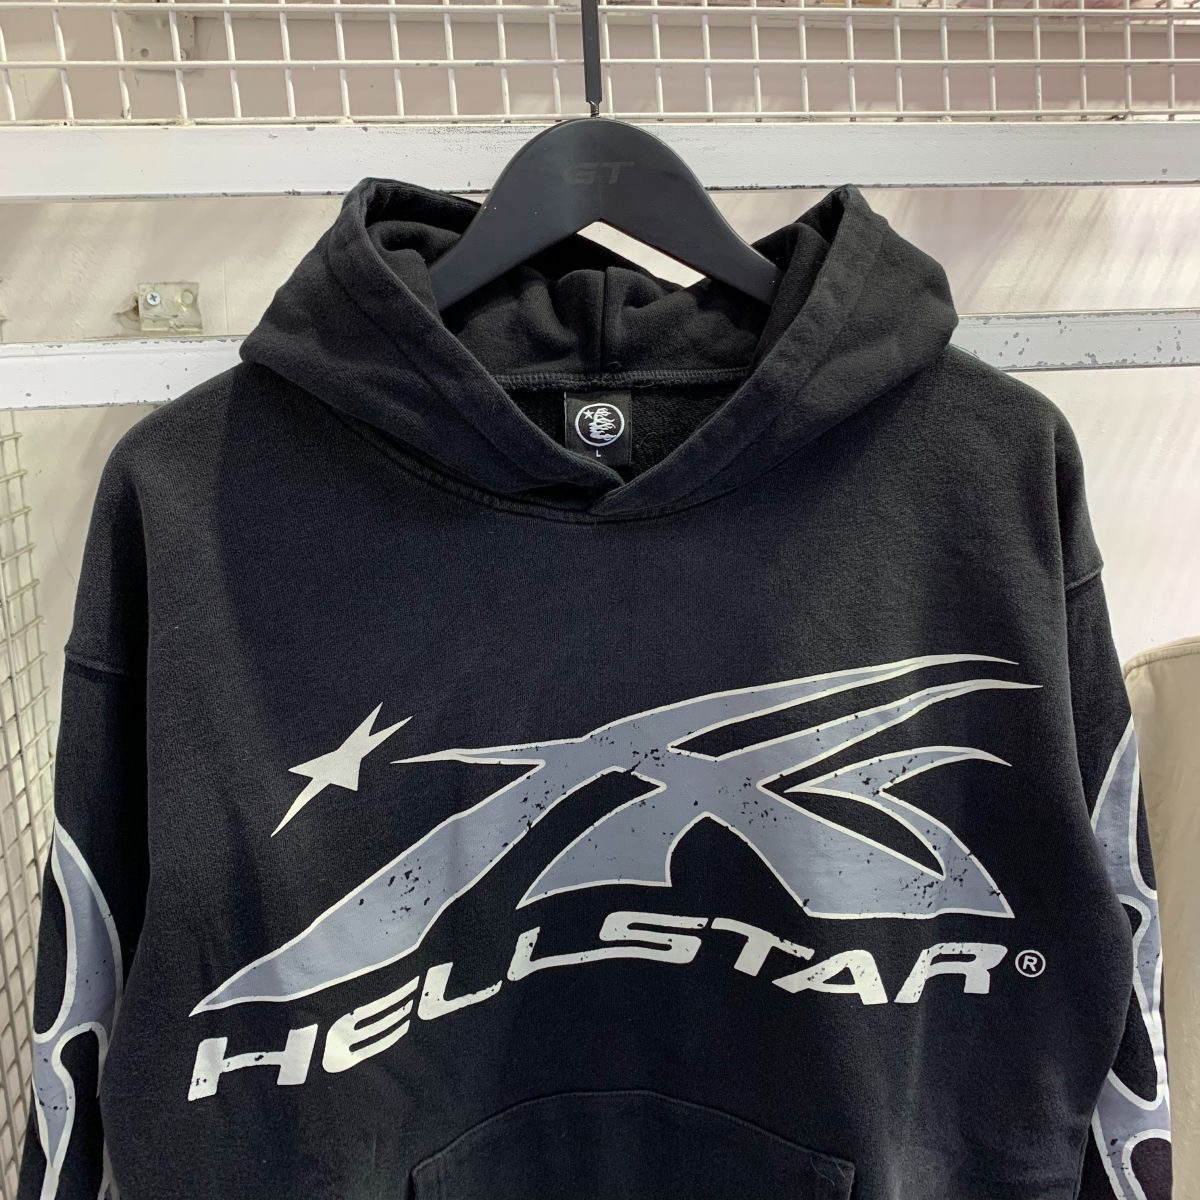 Hellstar Eyeball H706 new hot fashion custom high-end cotton hoodie vintage Shark Doberman Pinscher hoodie Streetwear Pullover Sweatshirts Loose Hoodies Lovers